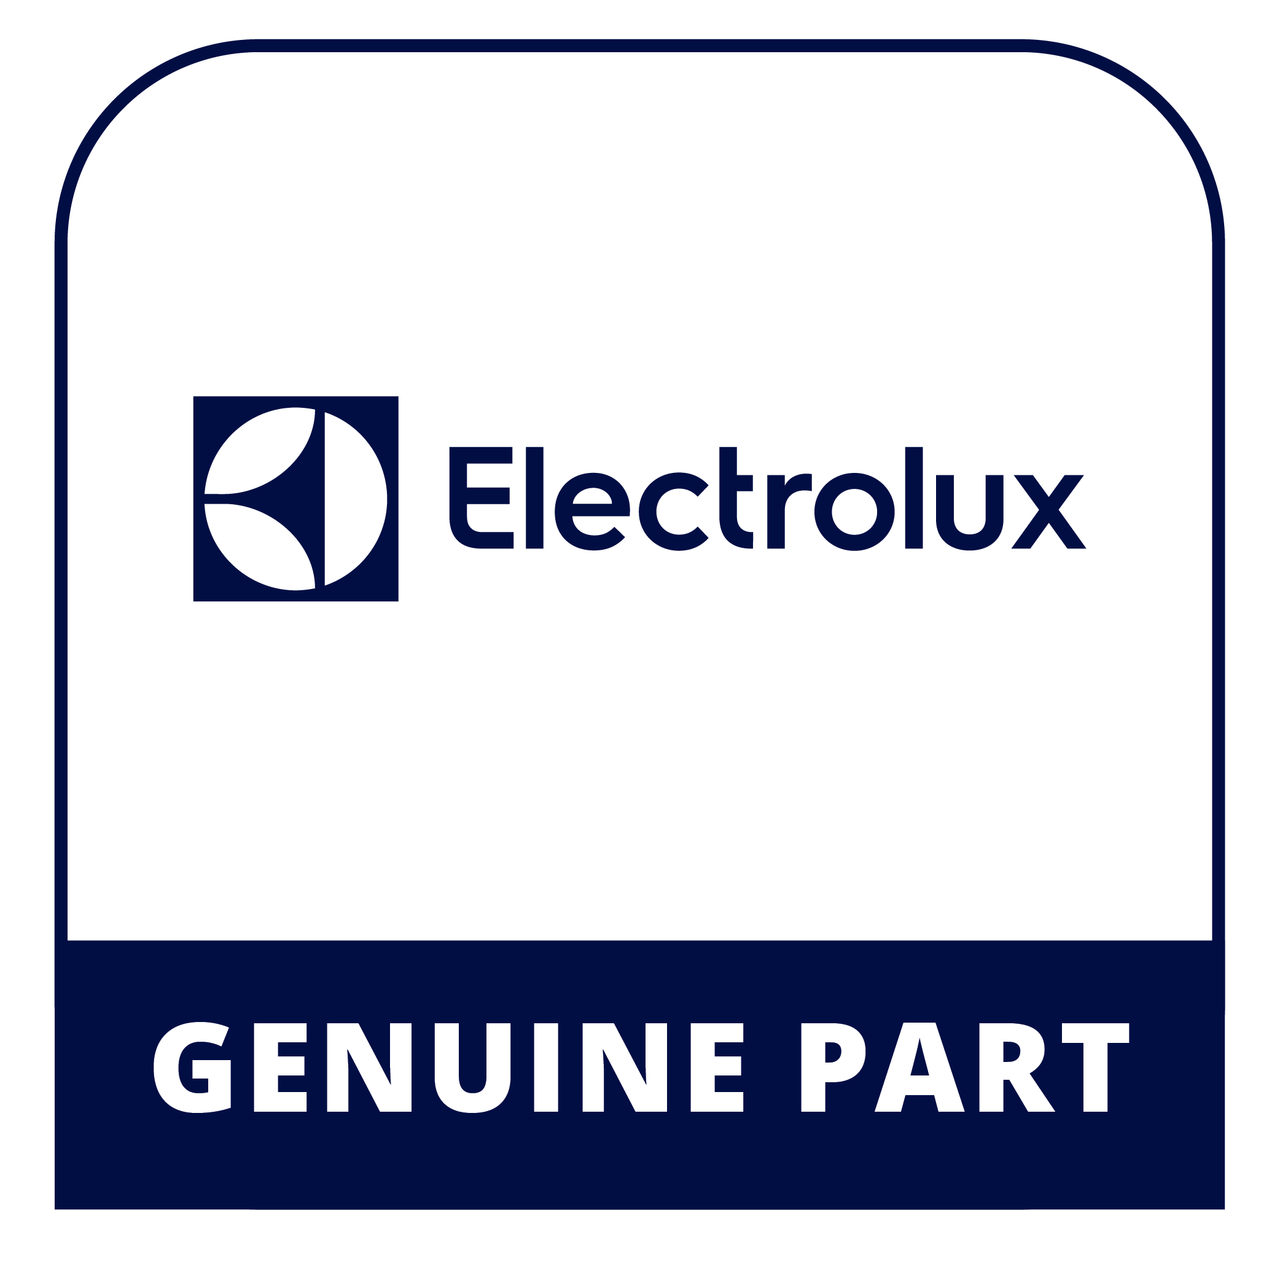 Frigidaire - Electrolux 316601800 Shield - Genuine Electrolux Part